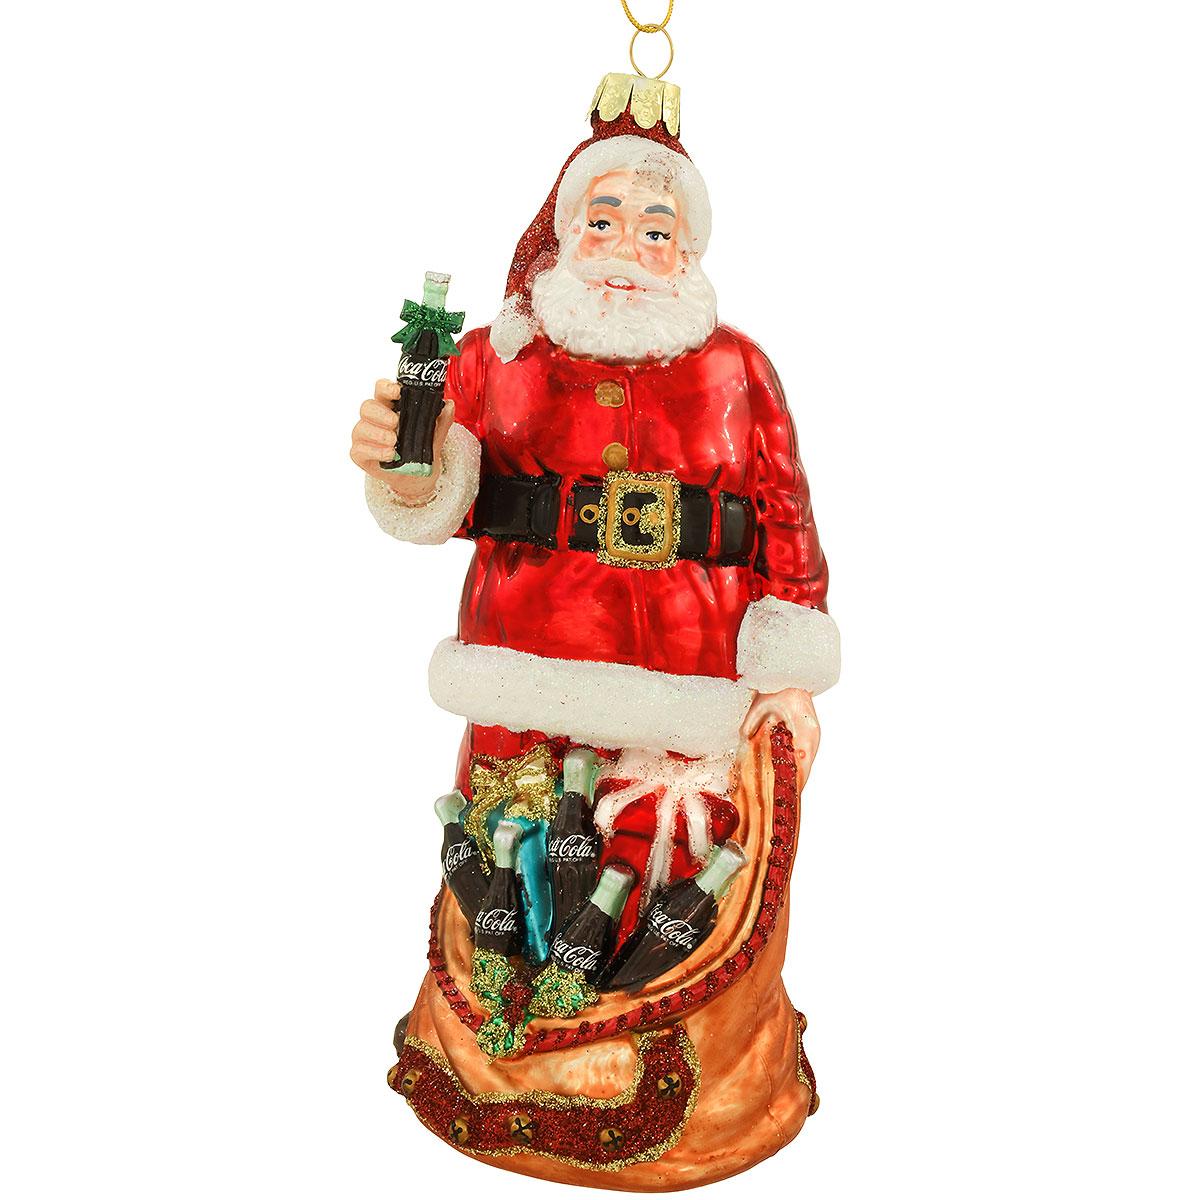 Coke Santa With Bag Of Bottles